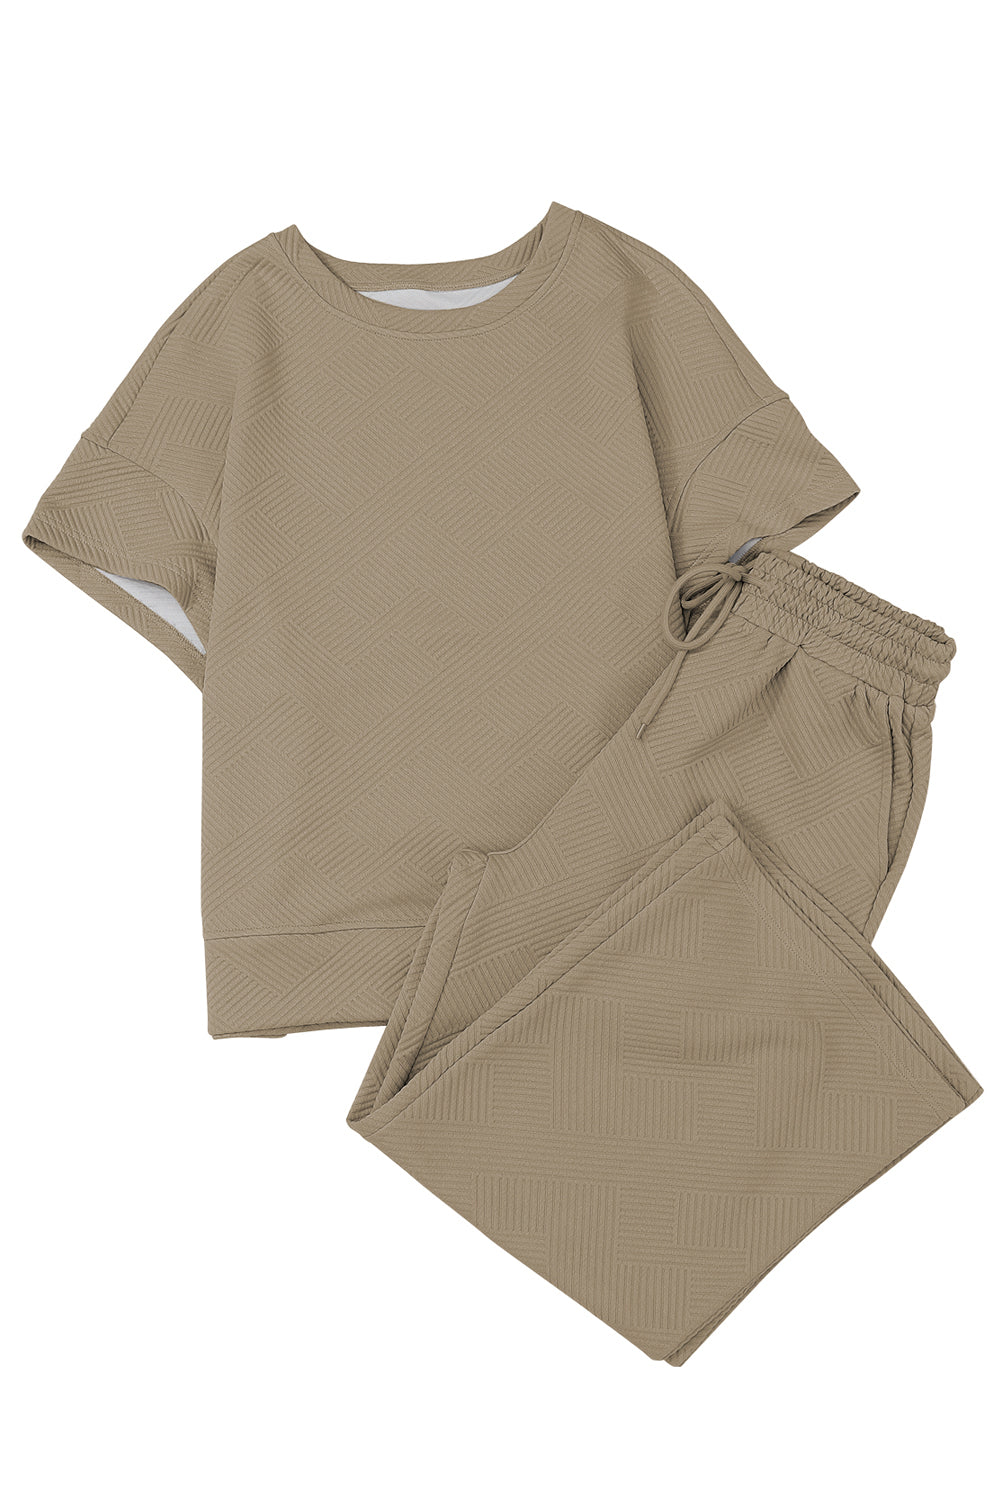 Stylish Pale Khaki Women's T-Shirt & Pants Set - Relaxed Fit